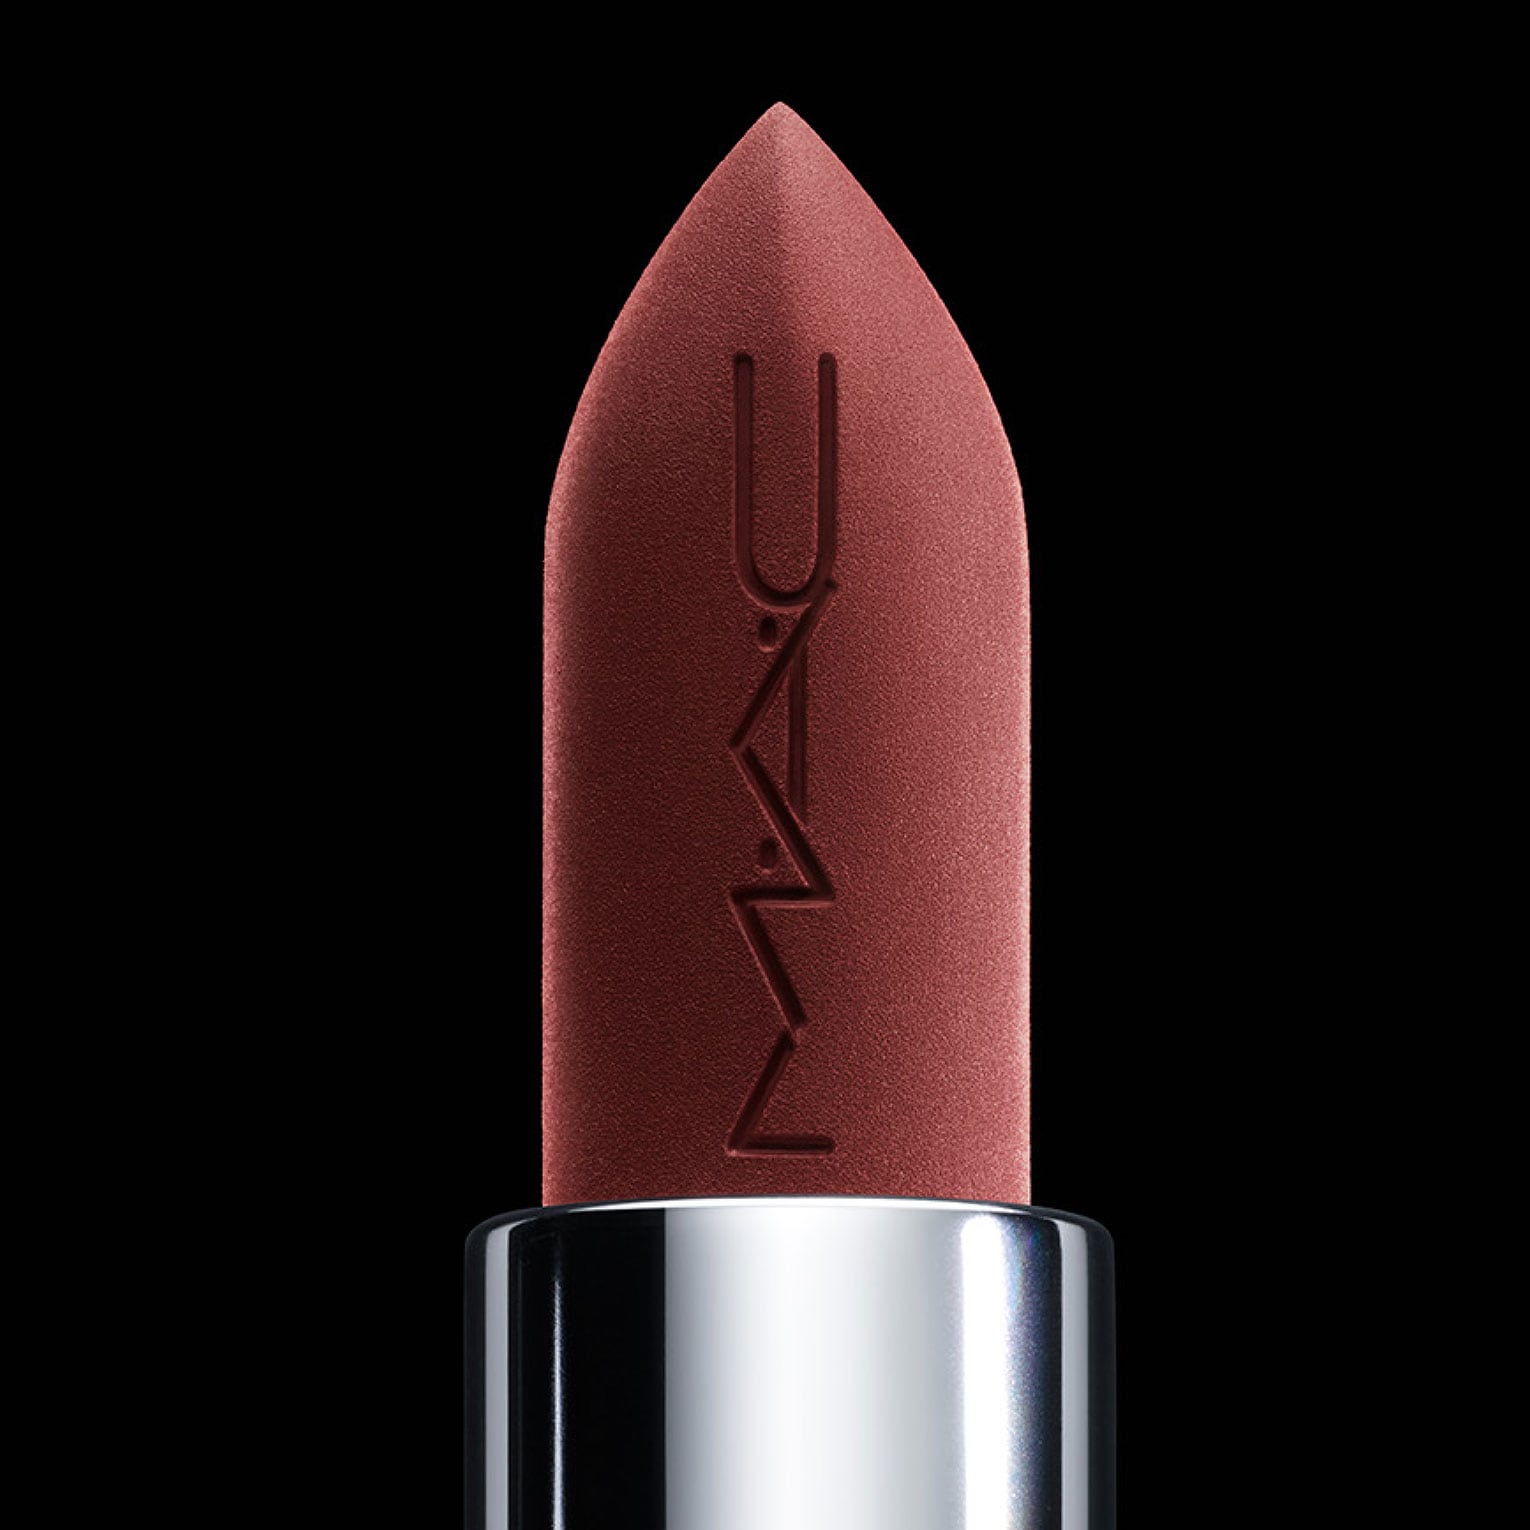 Macximal Lipstick in Velvet Teddy shade